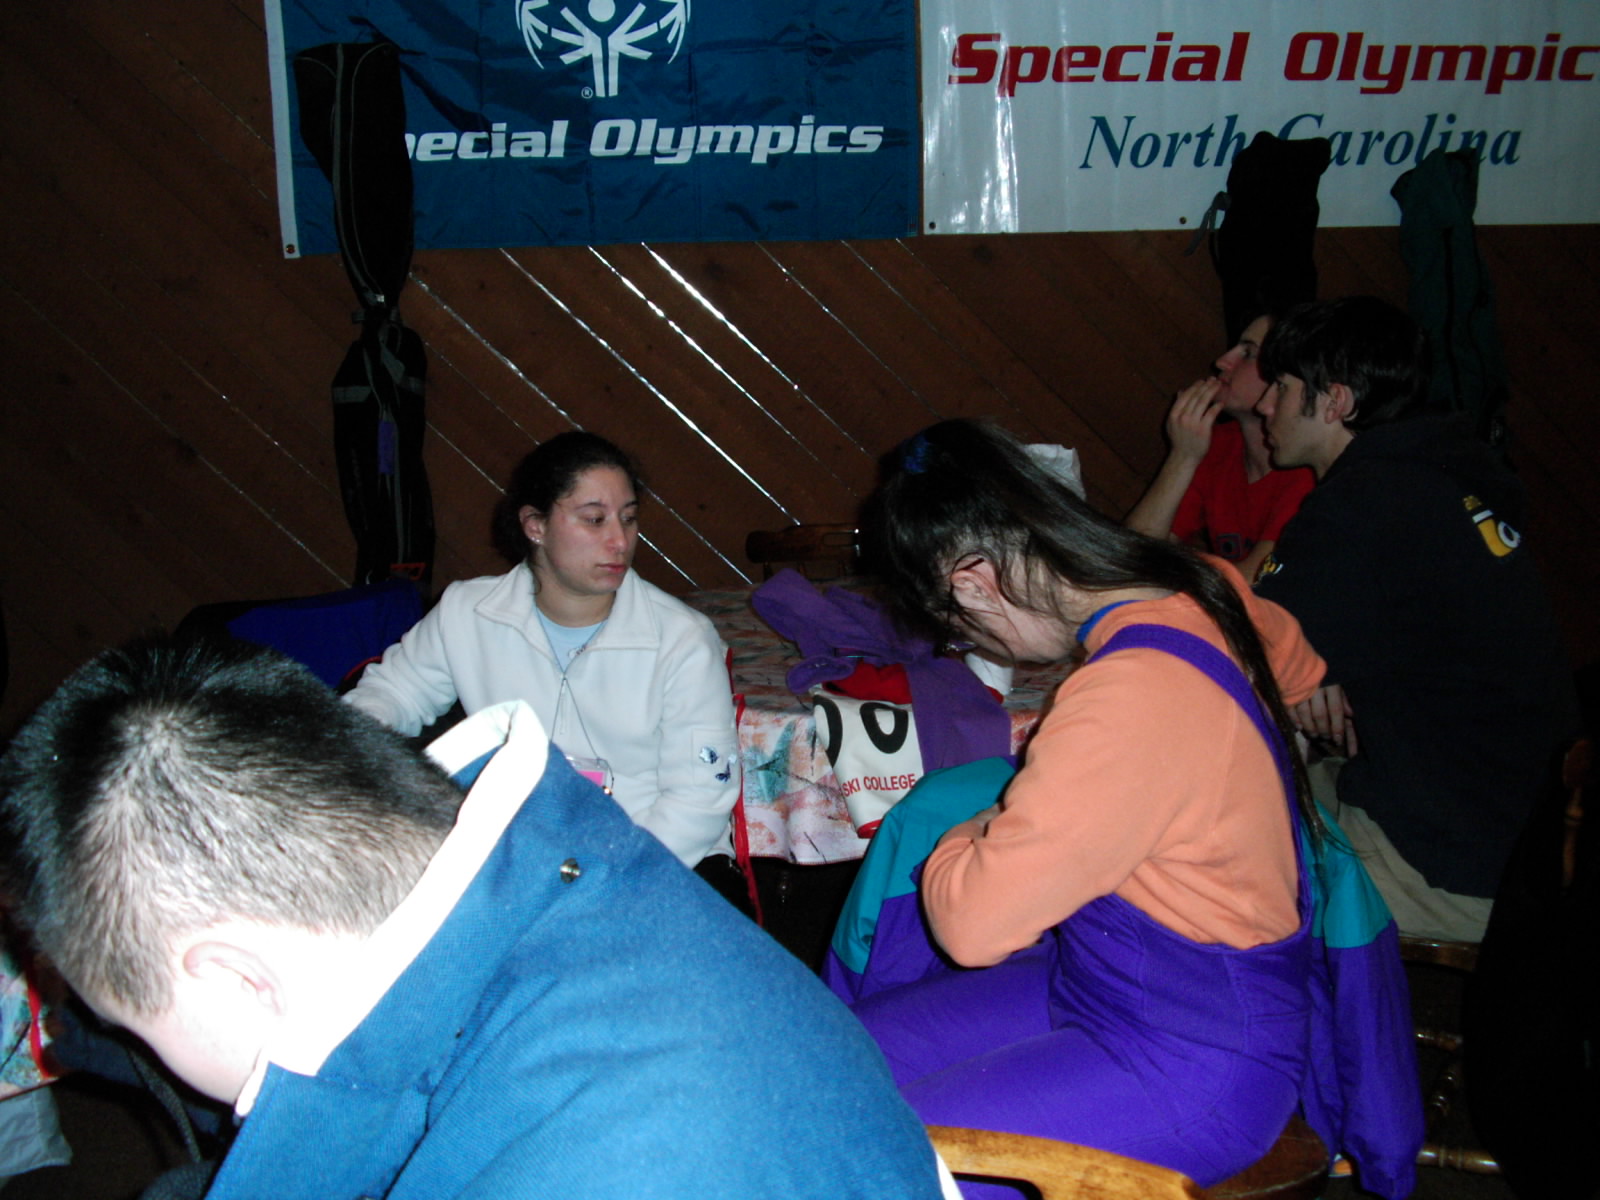 ./2005/Special Olynpic Skiing/SO Skiing Dec 0006.JPG